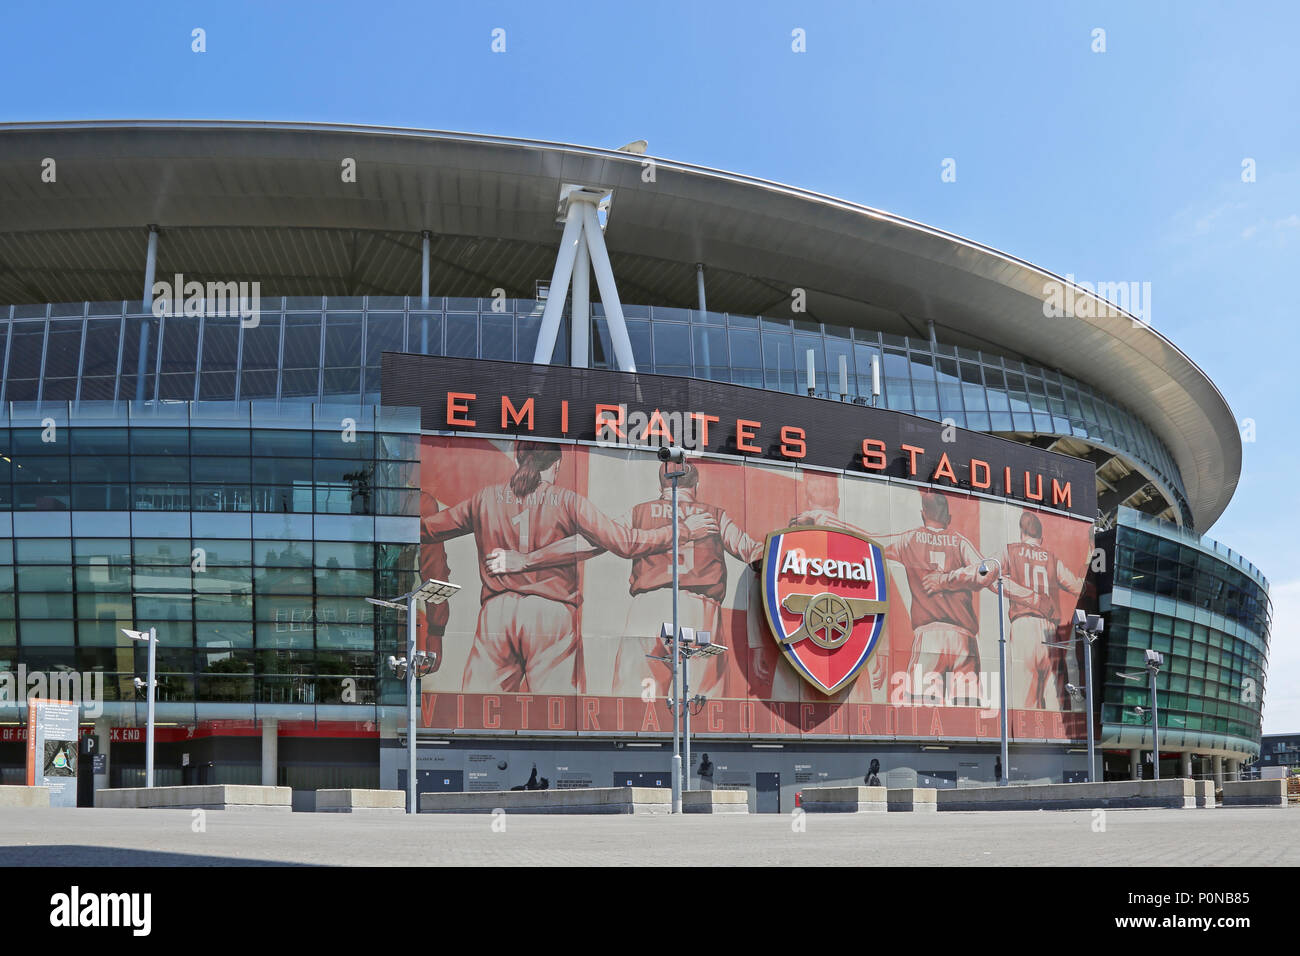 Exterior view of London's Emirates Stadium, home to Arsenal football club. Stock Photo